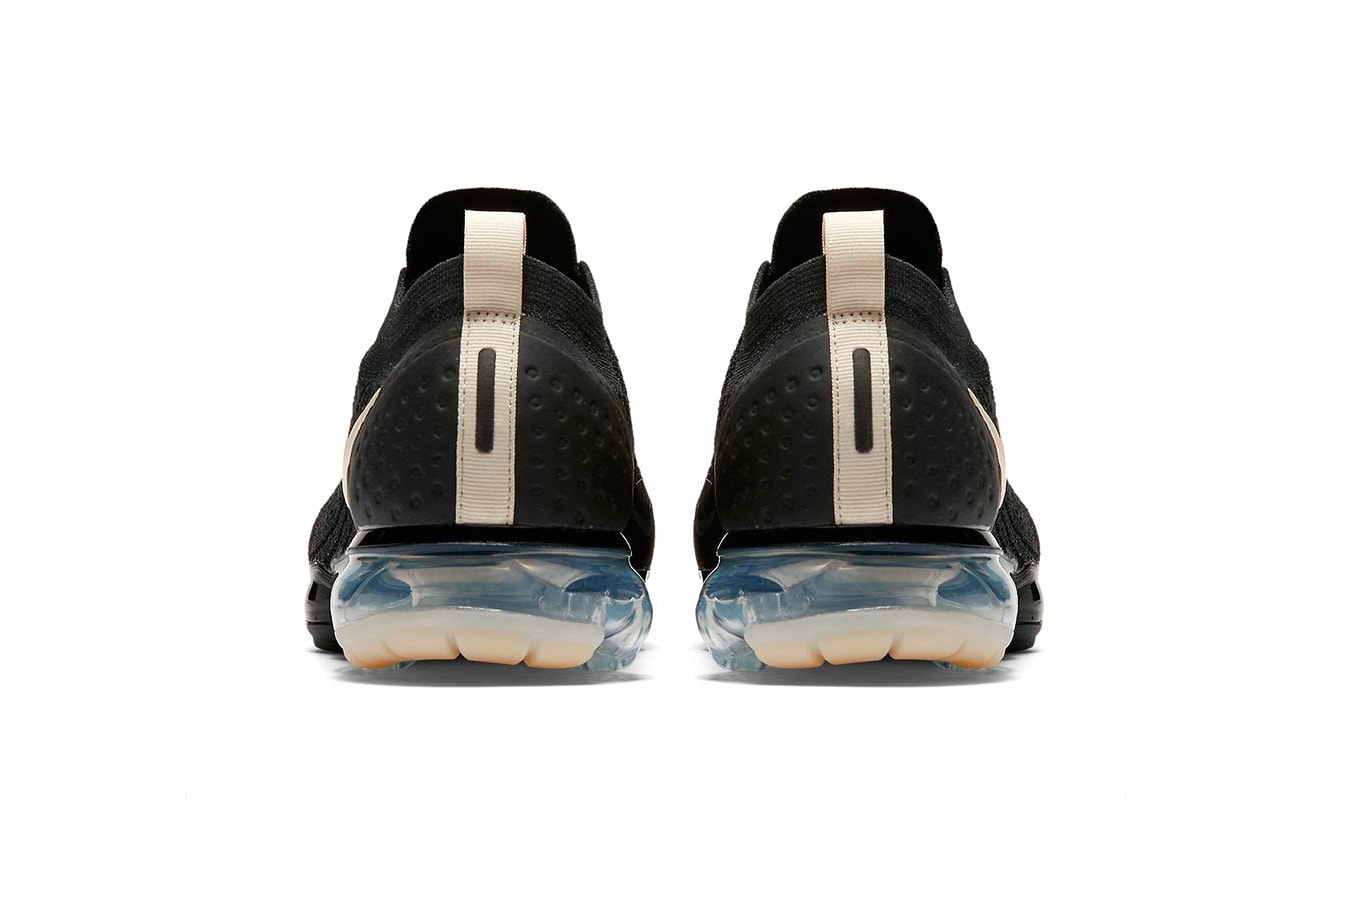 Nike Air VaporMax Moc 2 "Black/Light Cream" Release Date